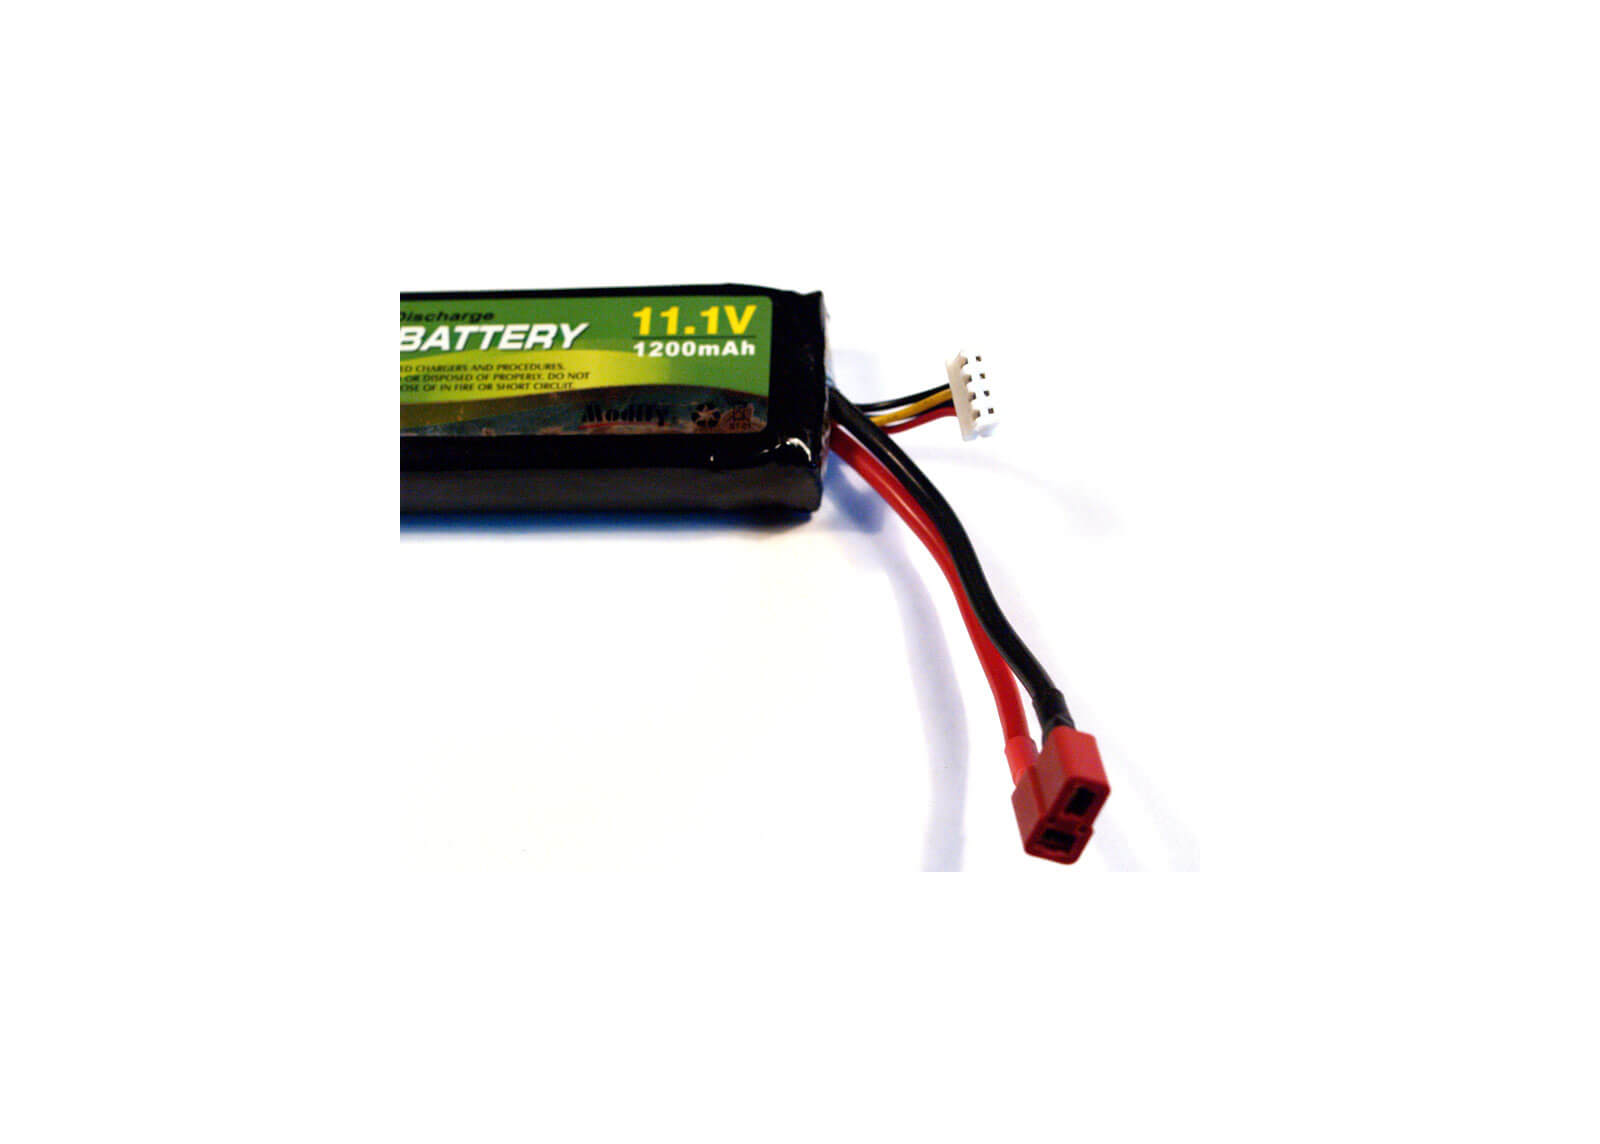 LiPo Airsoft Gun Battery Package 25C 11.1V 1200mAh-Modify Airsoft Accessories